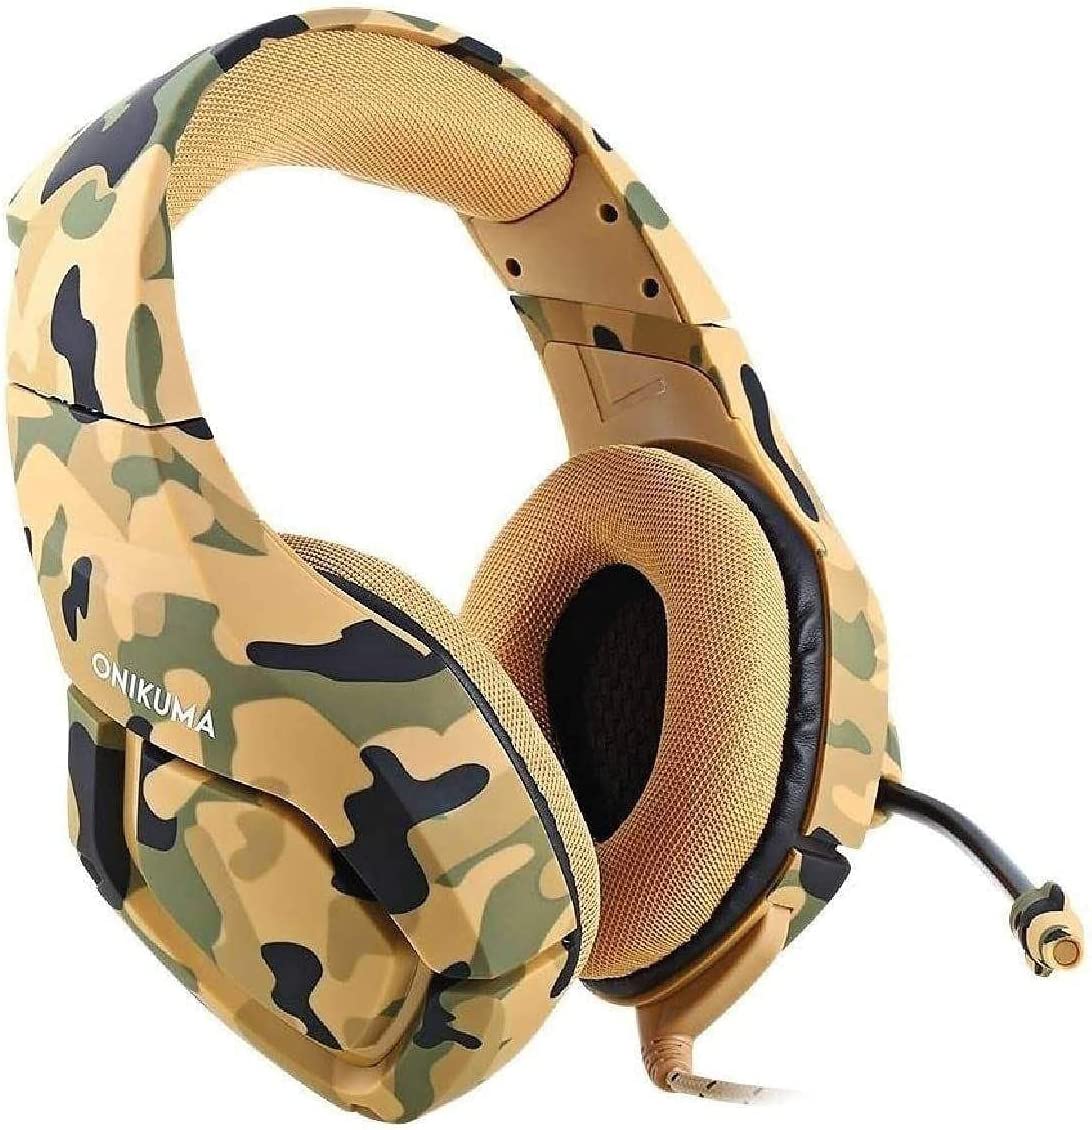 Onikuma K1-B Gaming Headphone with Microphone - Camouflage Yellow